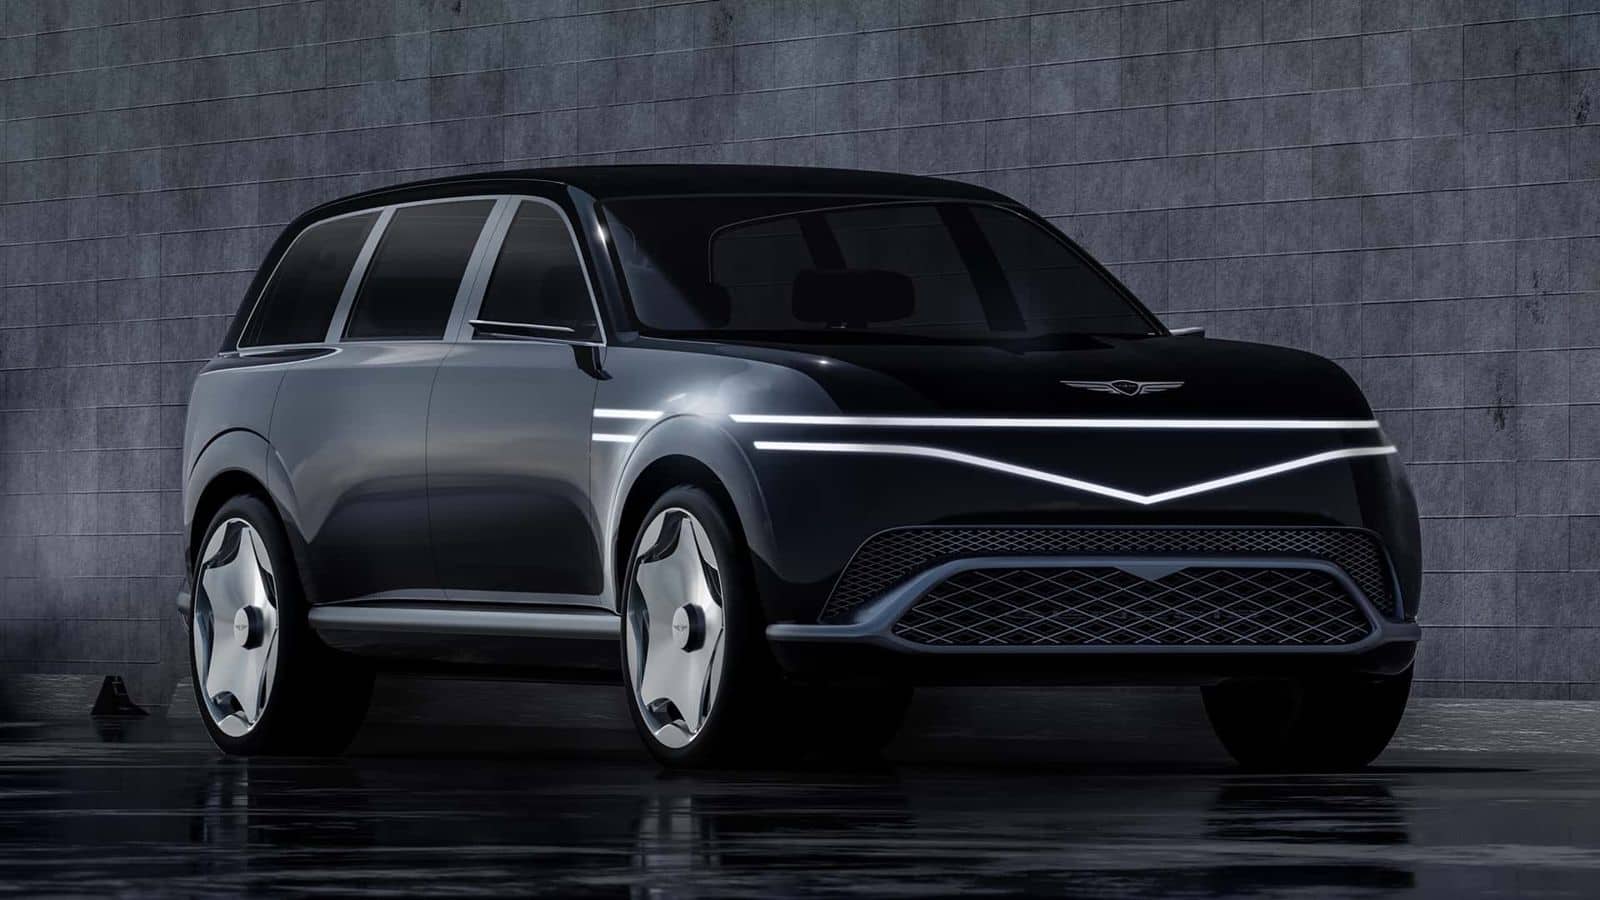 Genesis reveals its Neolun SUV concept: Check design, features